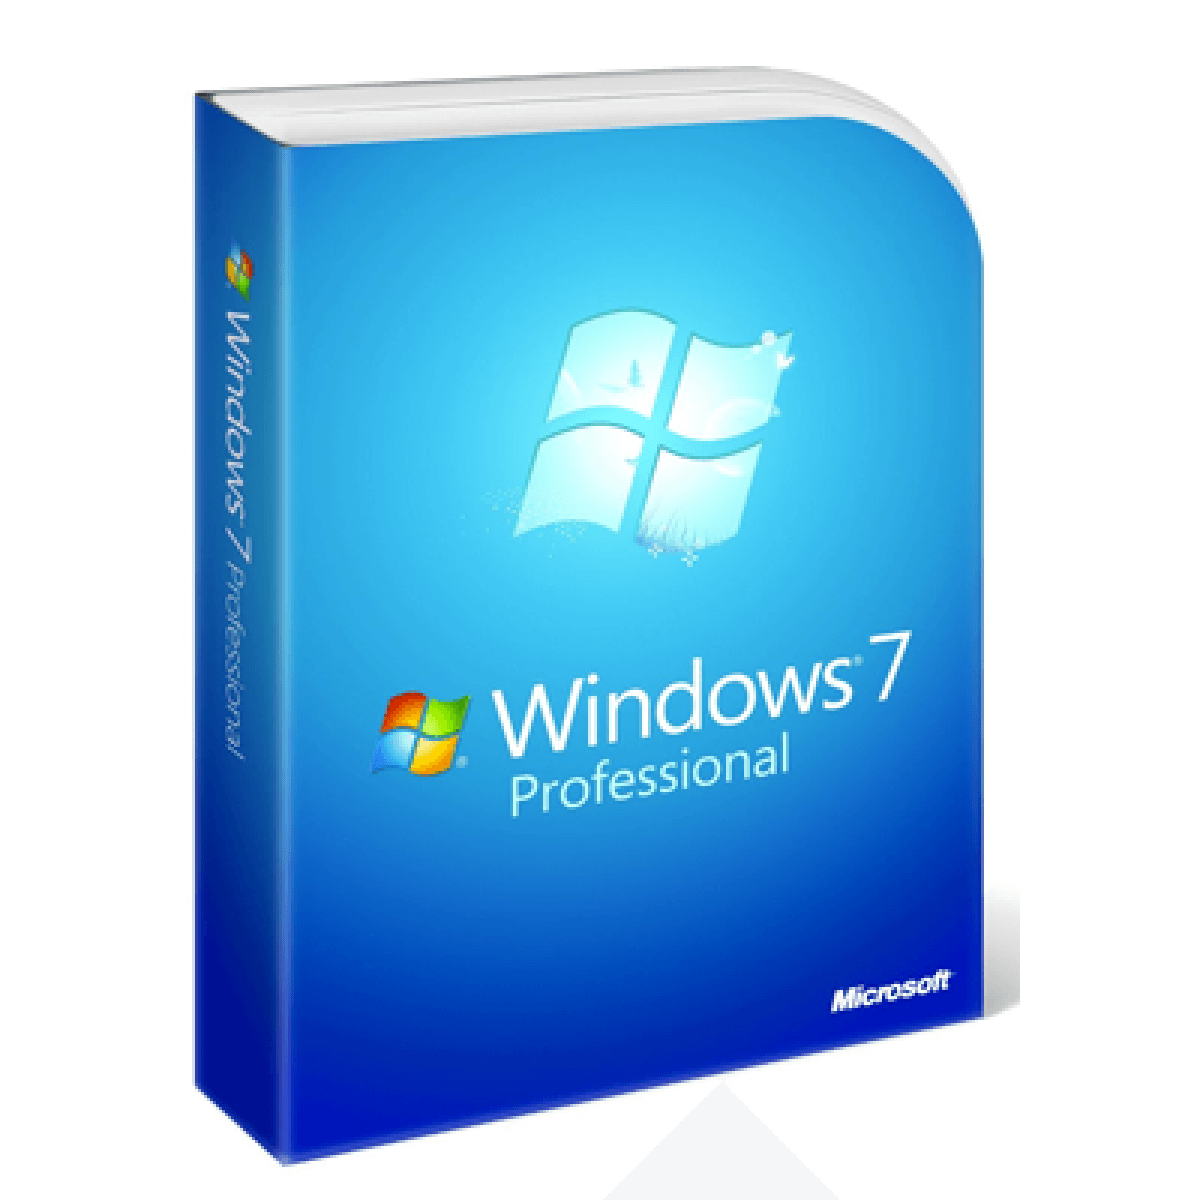 Windows 7 Pro Logo - Windows 7 Professional 32 Bit Download, 100% genuine Microsoft ...